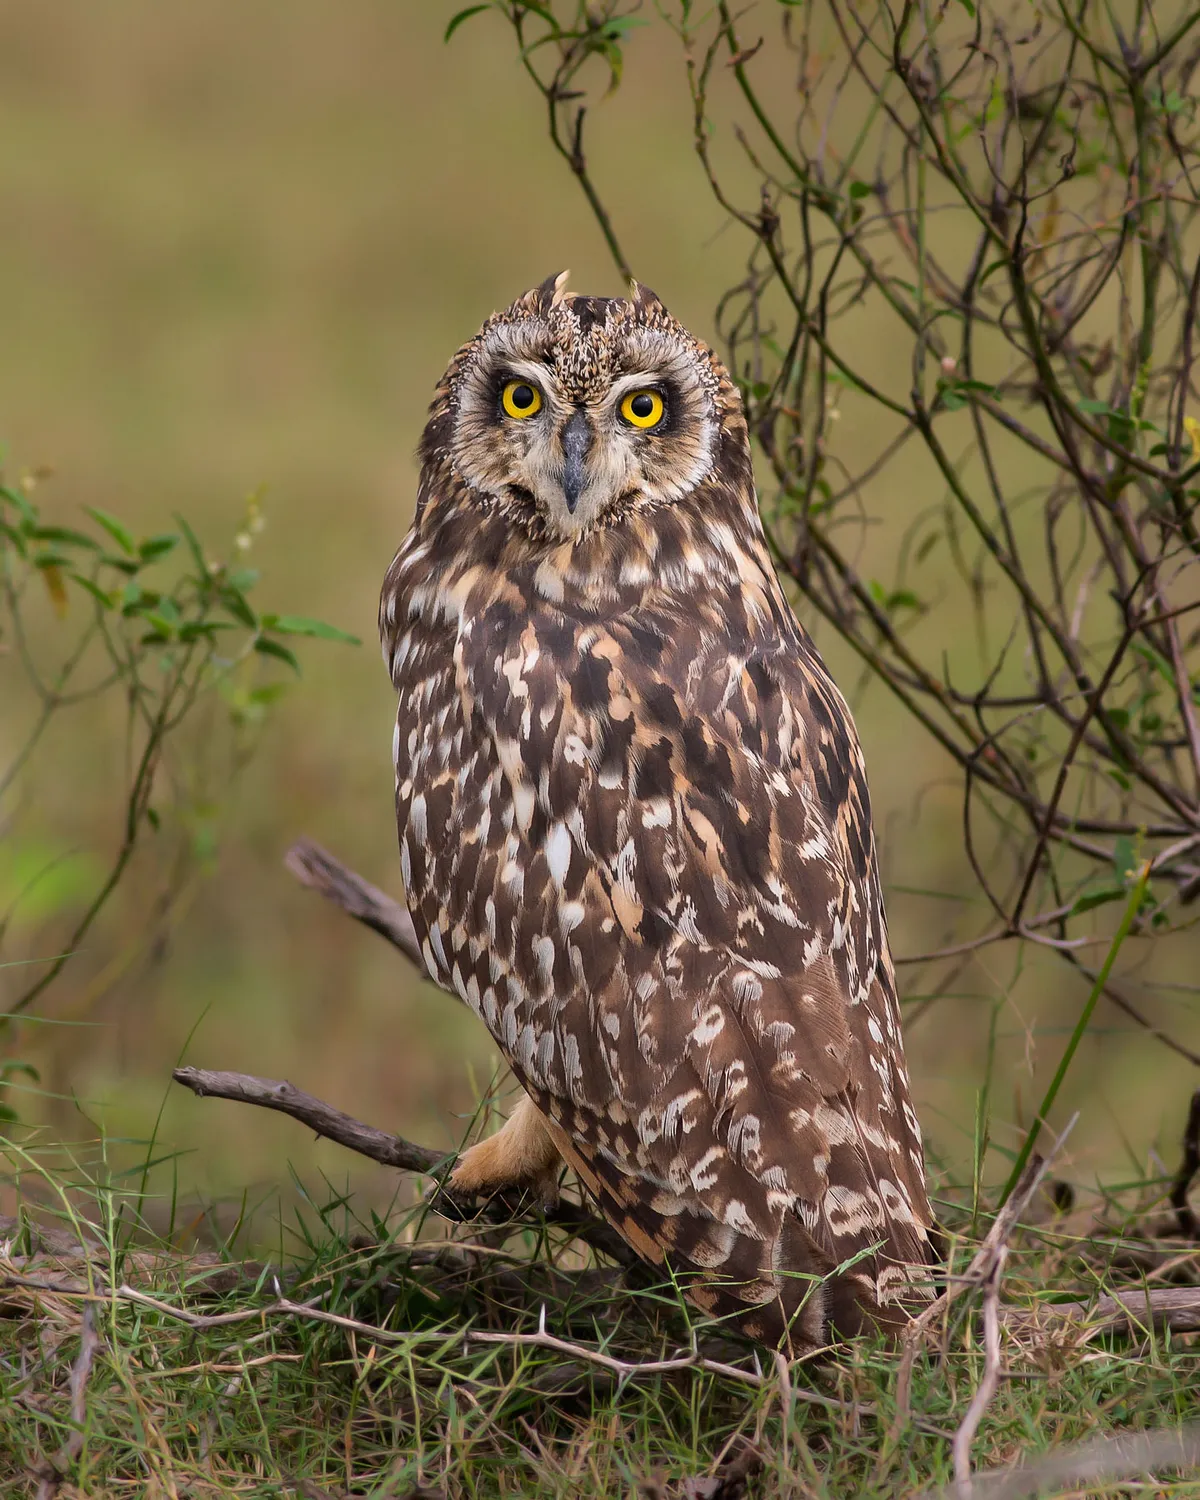 Category: 8 and under years old, gold award winner. I SEE YOU: Short-eared owl. © Deeksha Sambath (India)/Bird Photographer of the Year